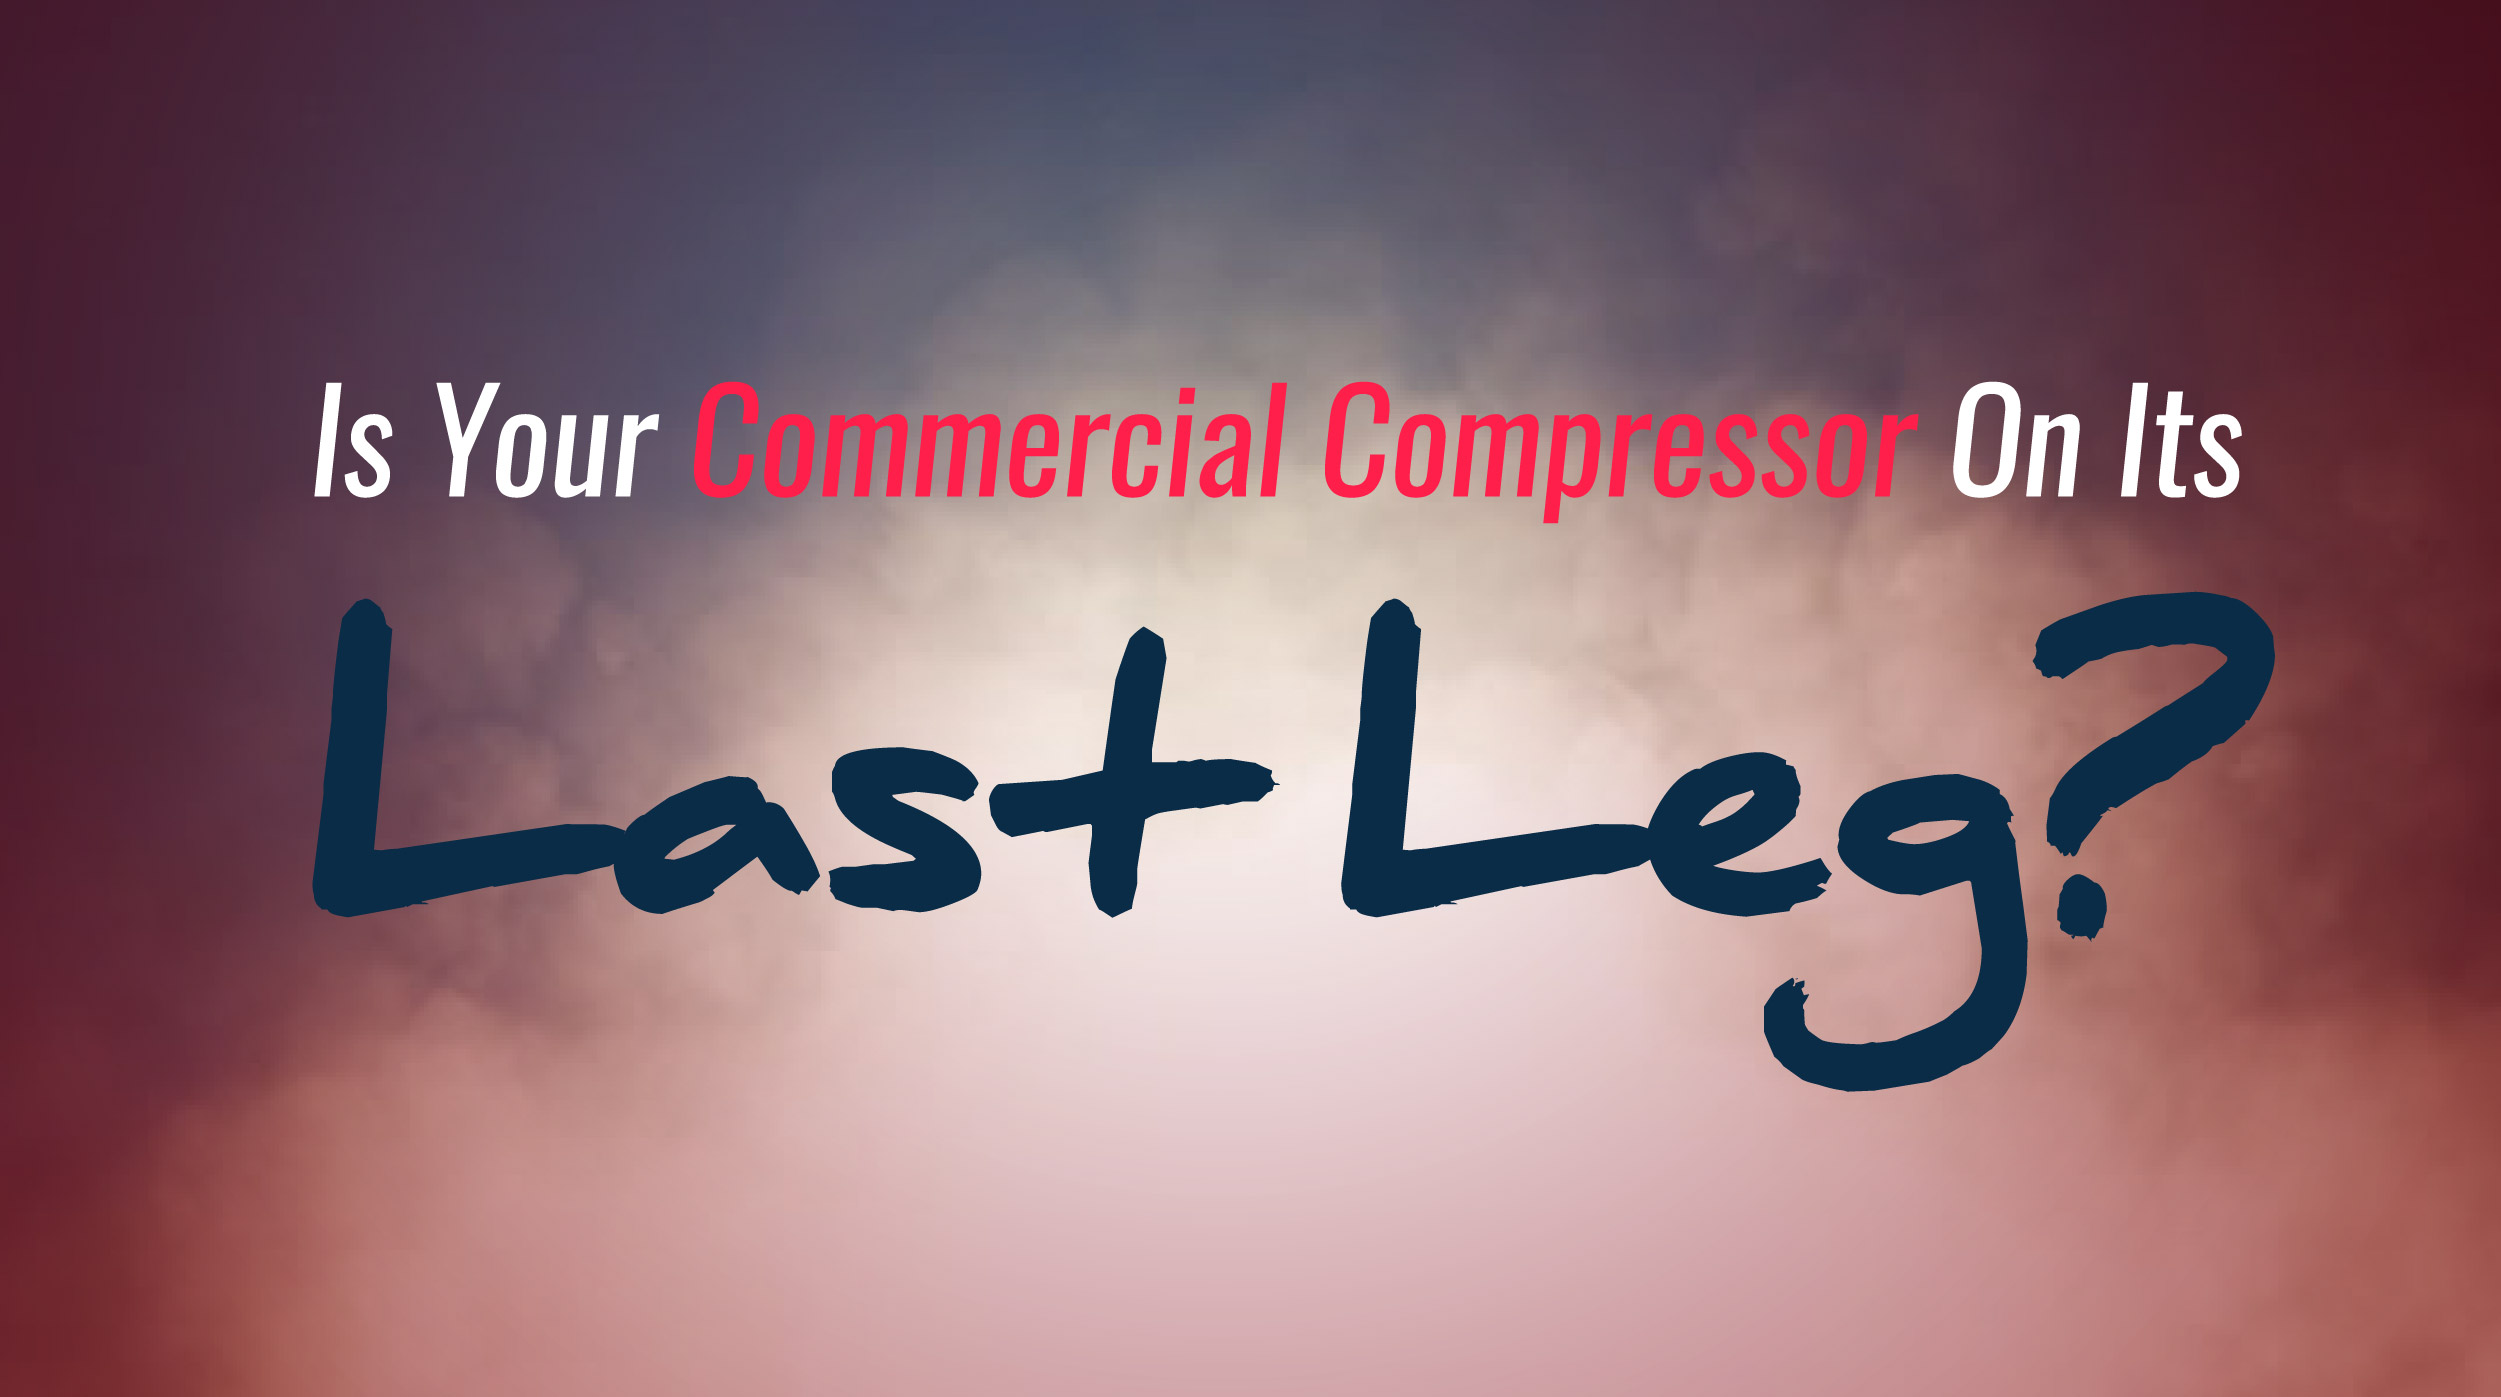 Commercial Compressor Failure